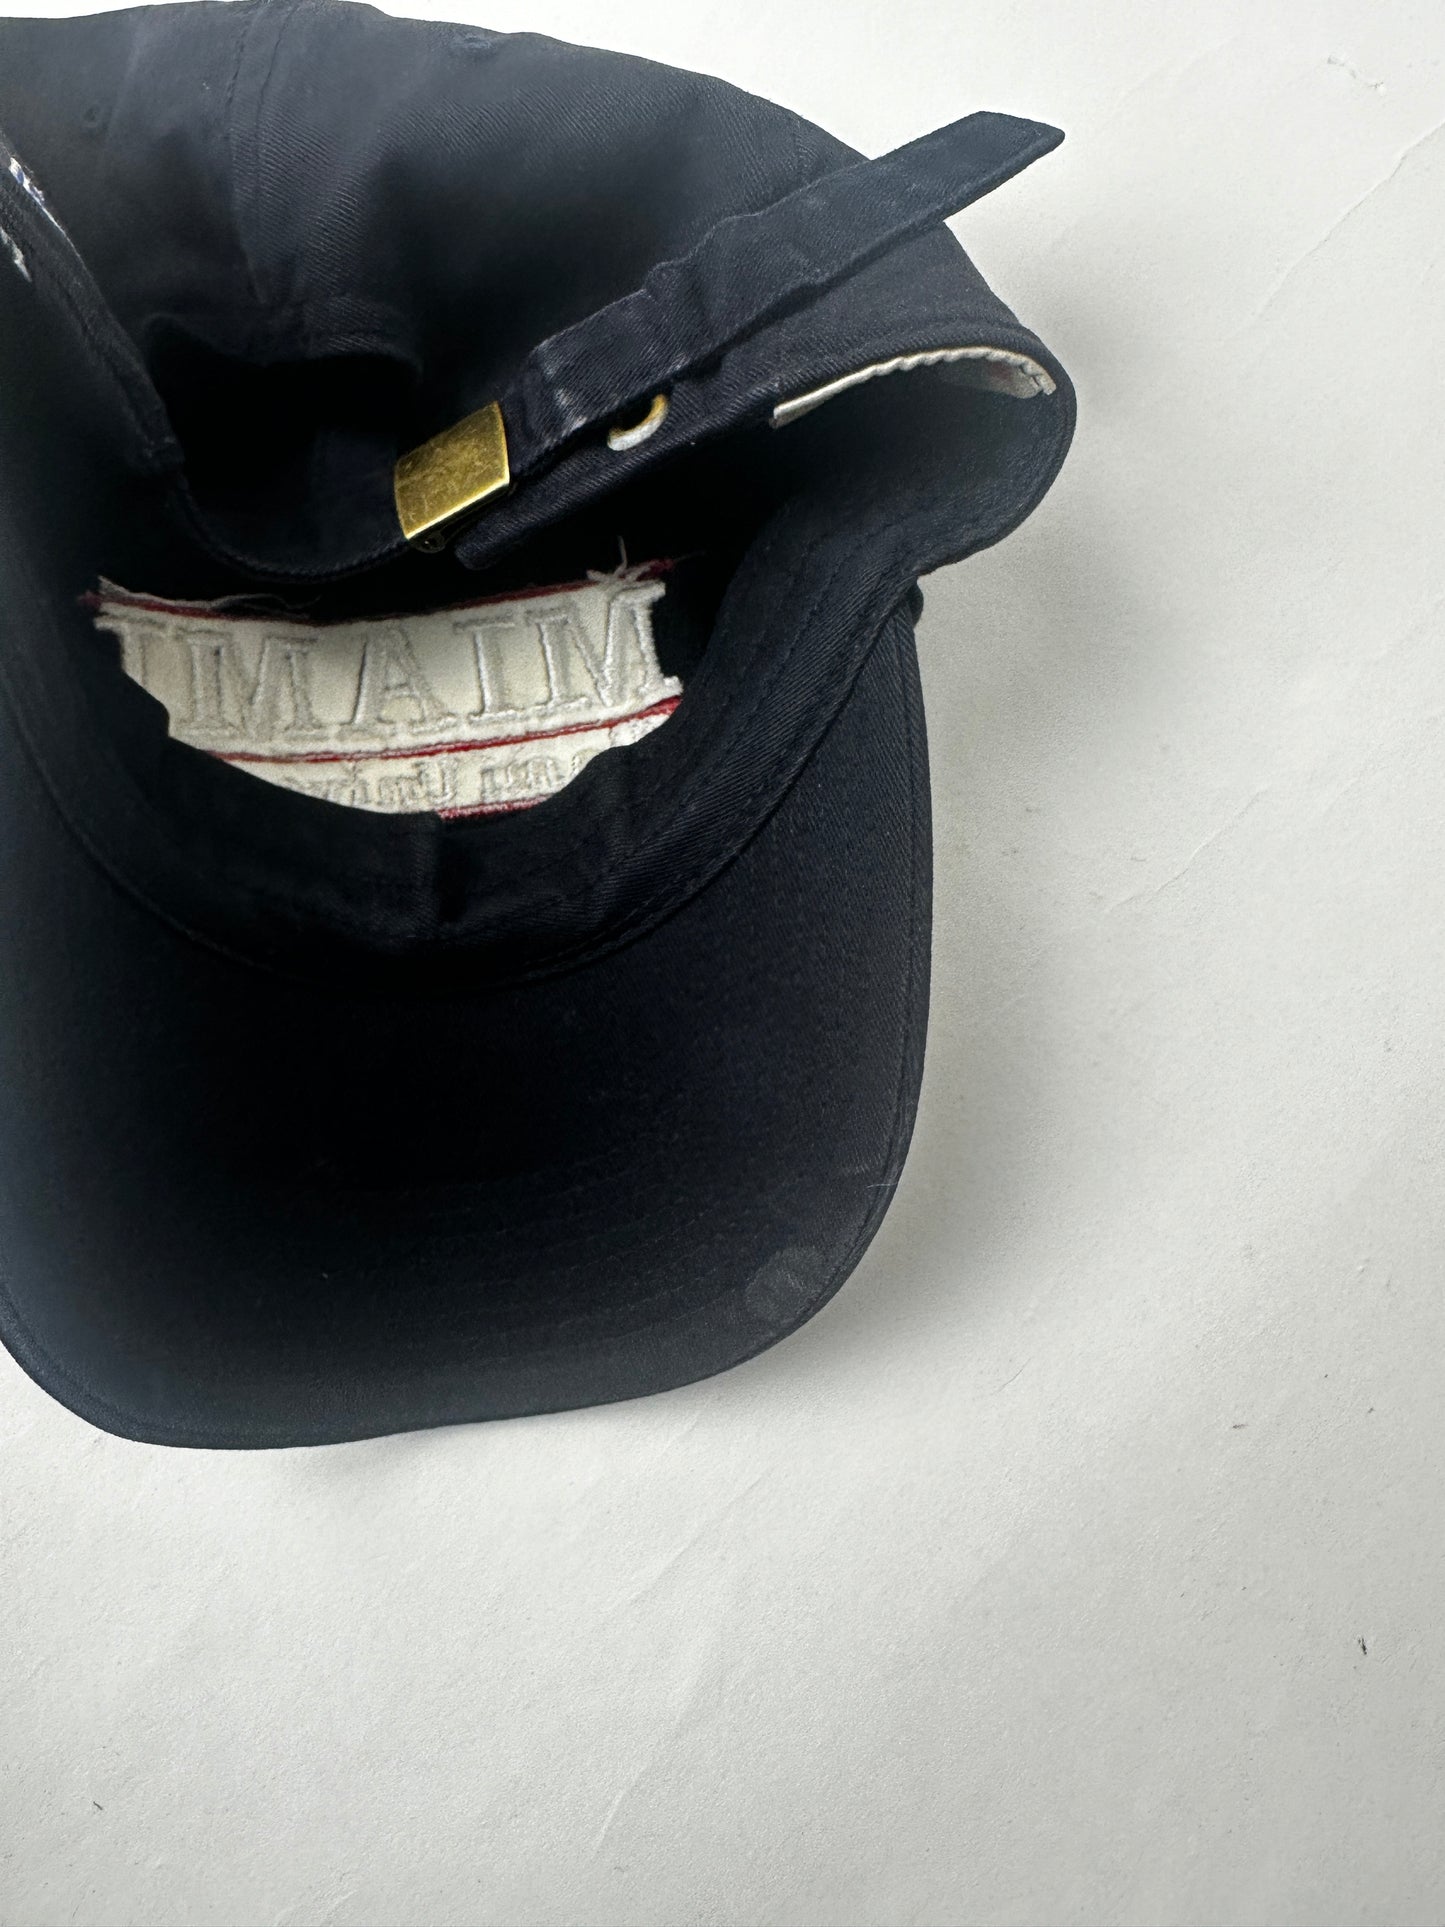 Vintage Miami University Hat Cap Black Strap Back College